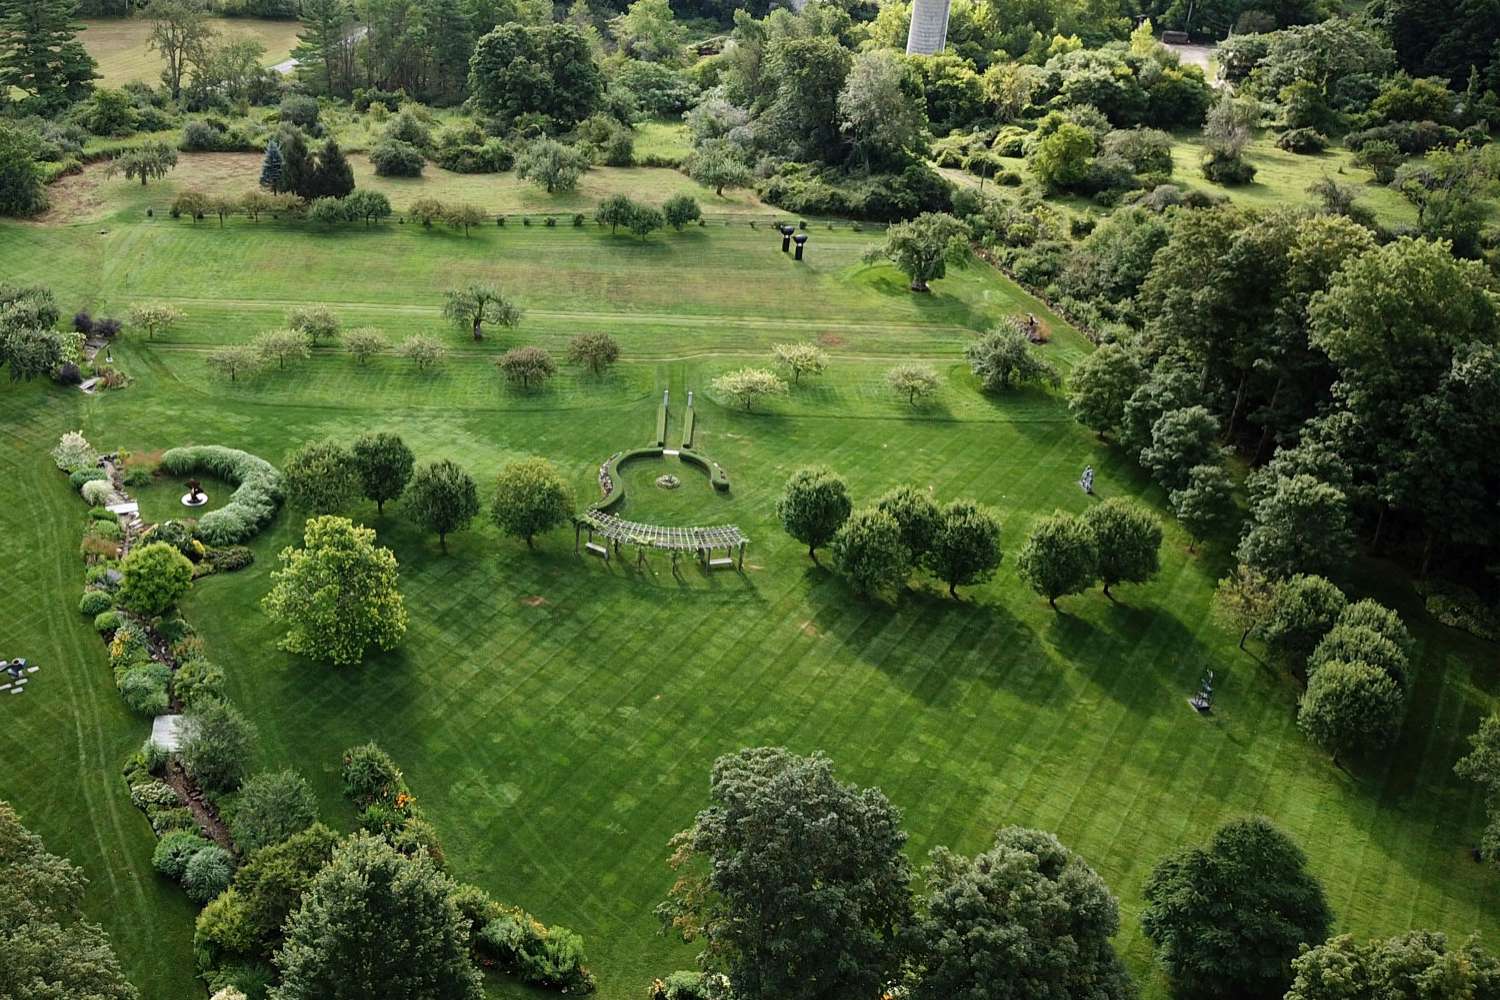 Bird's eye view of Seven Springs Garden and Sculpture Park in Manchester, VT.